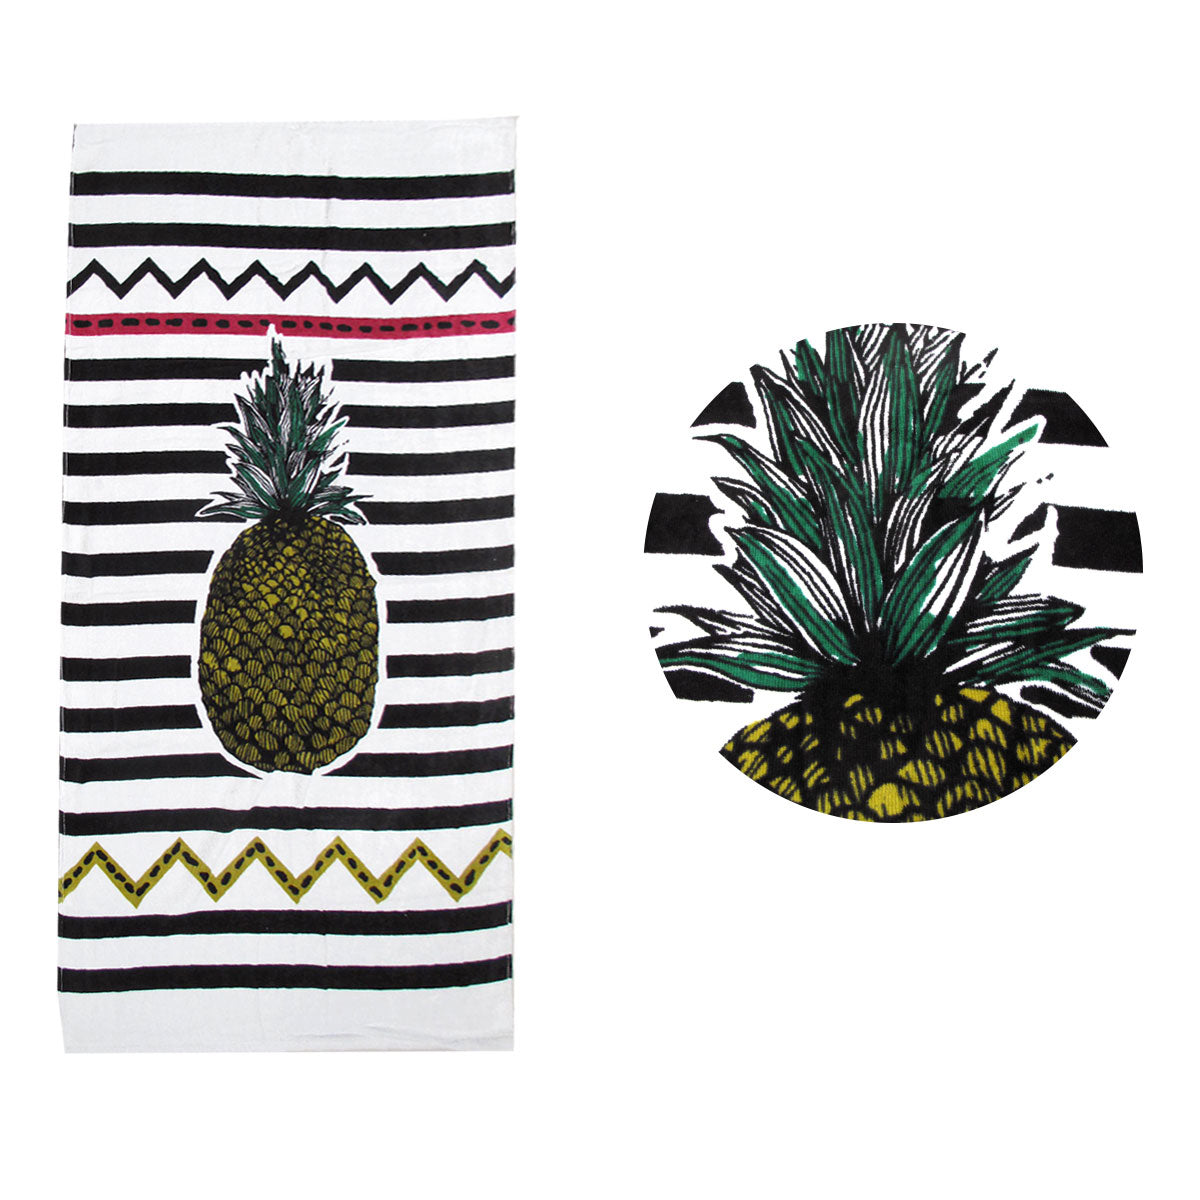 The Gaint Pineapple Cotton Beach Towel